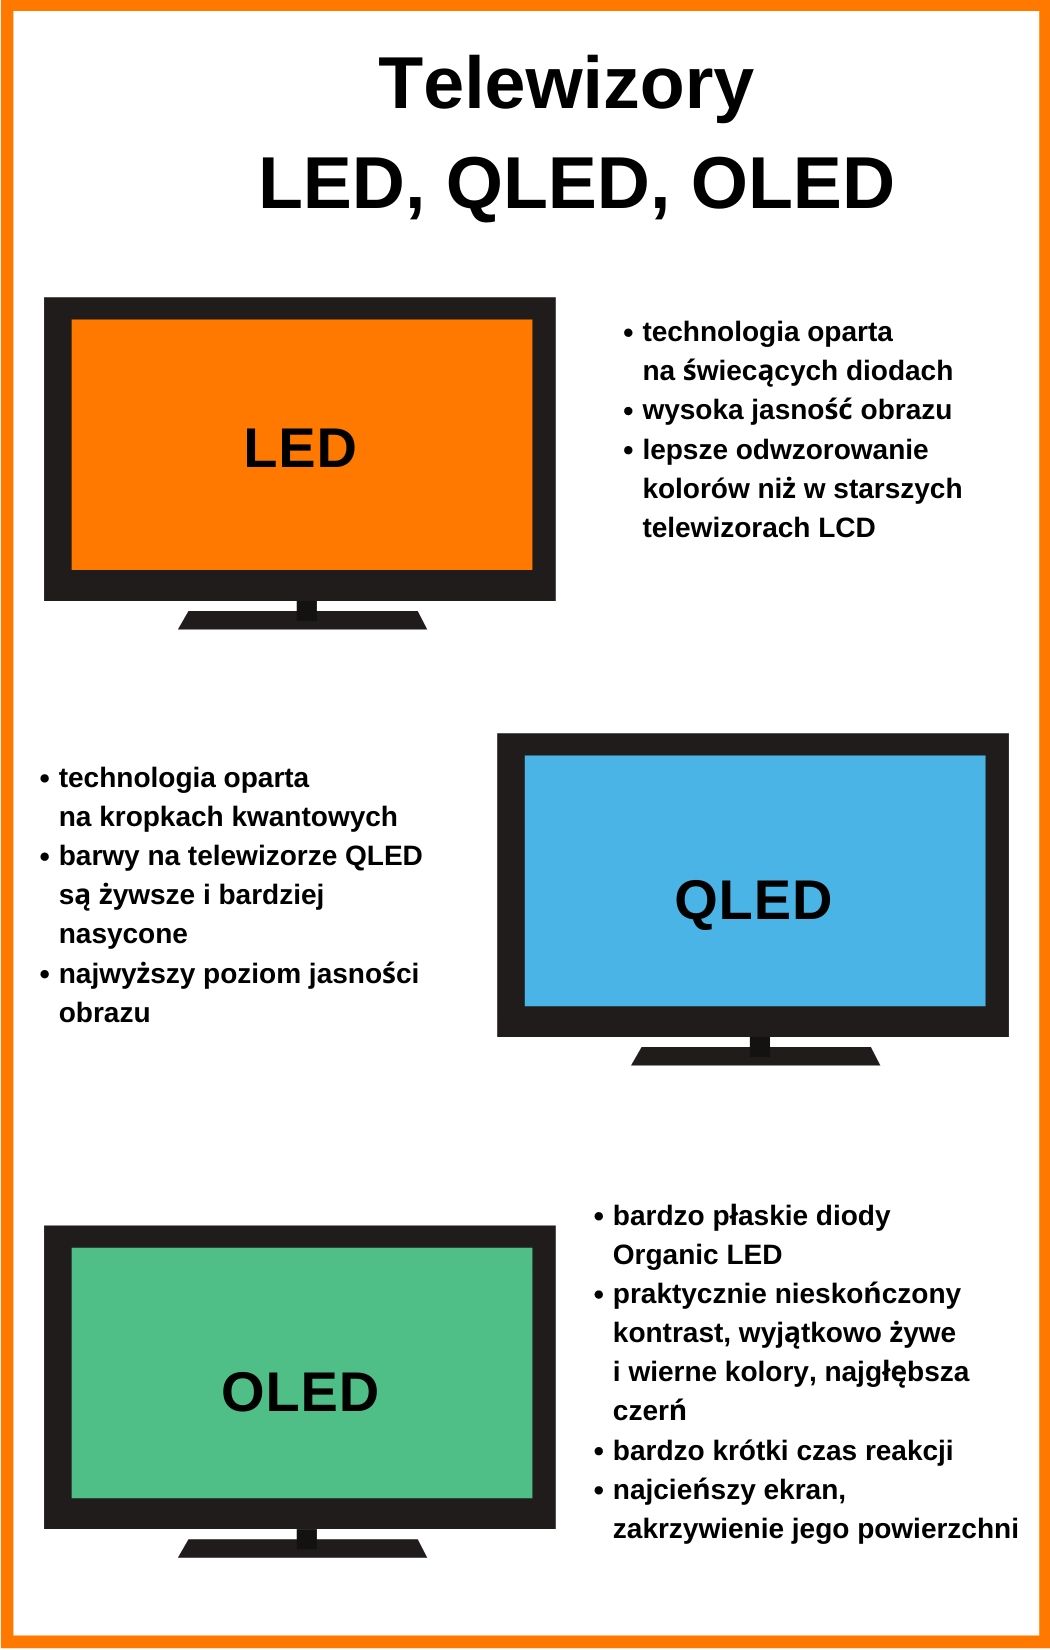 Co jest lepsze LED czy OLED?